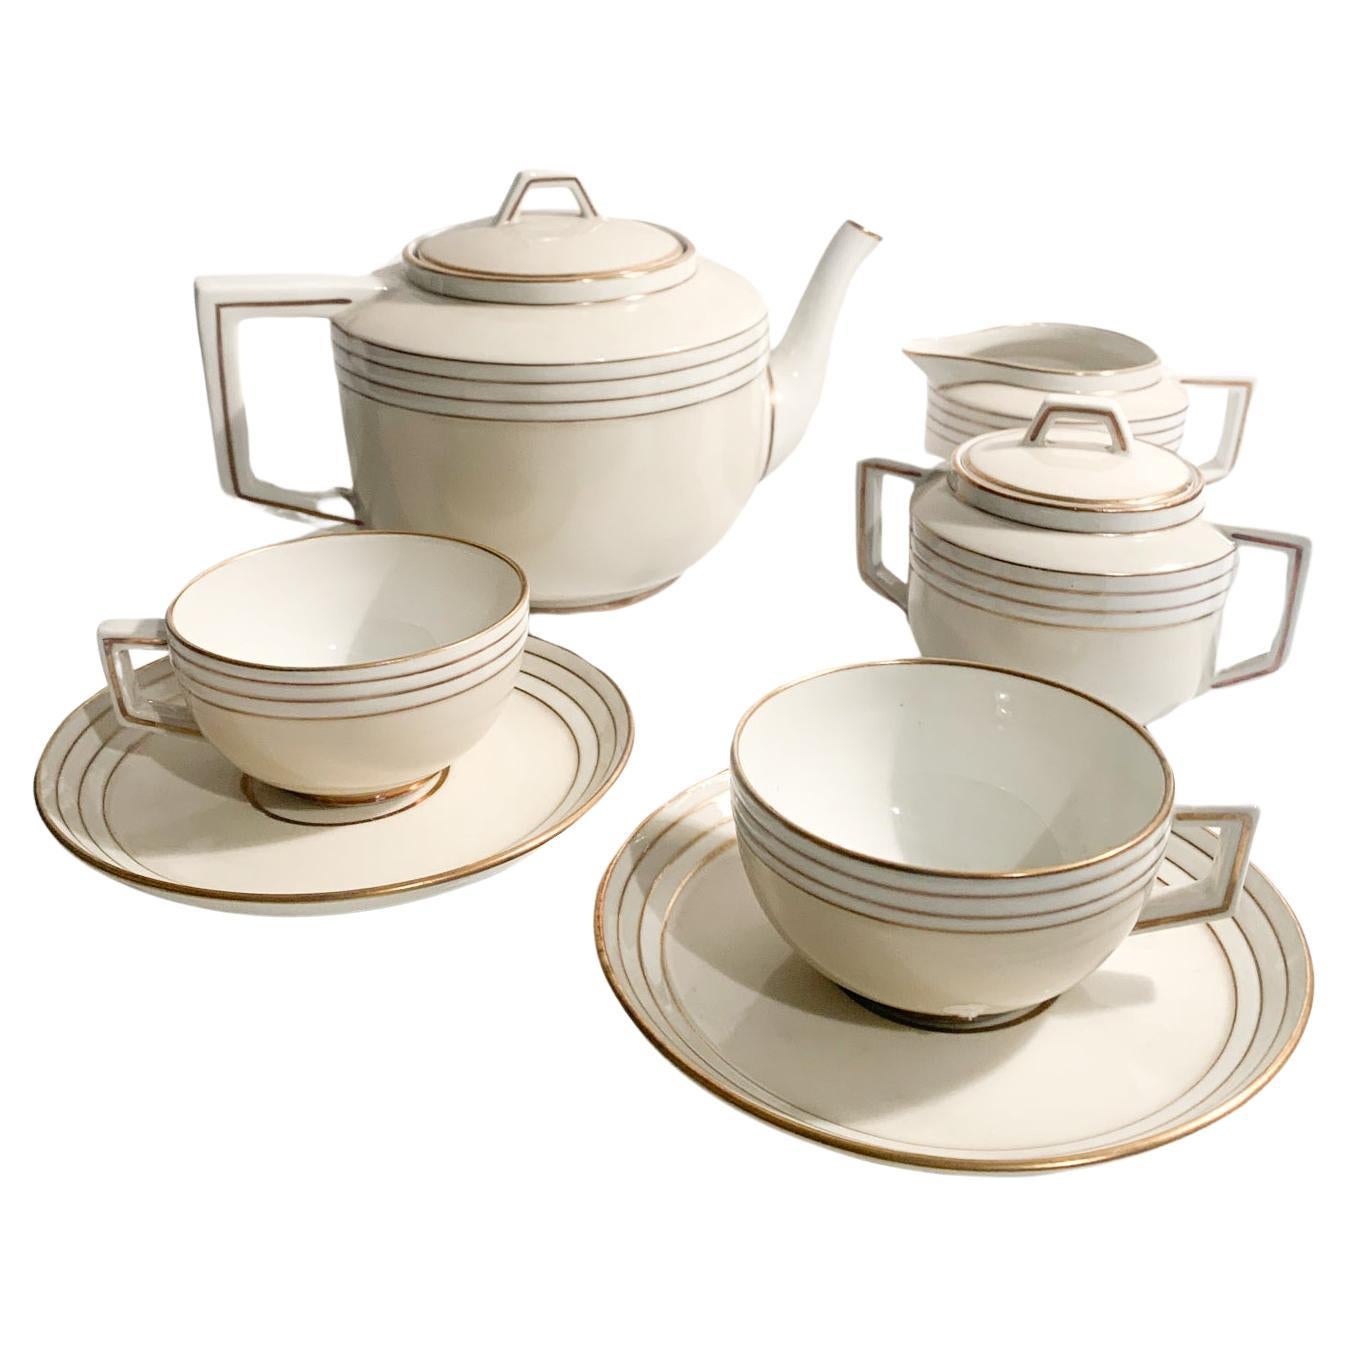 Twelve Richard Ginori Decò Tea Set in Porcelain from the 1940s For Sale